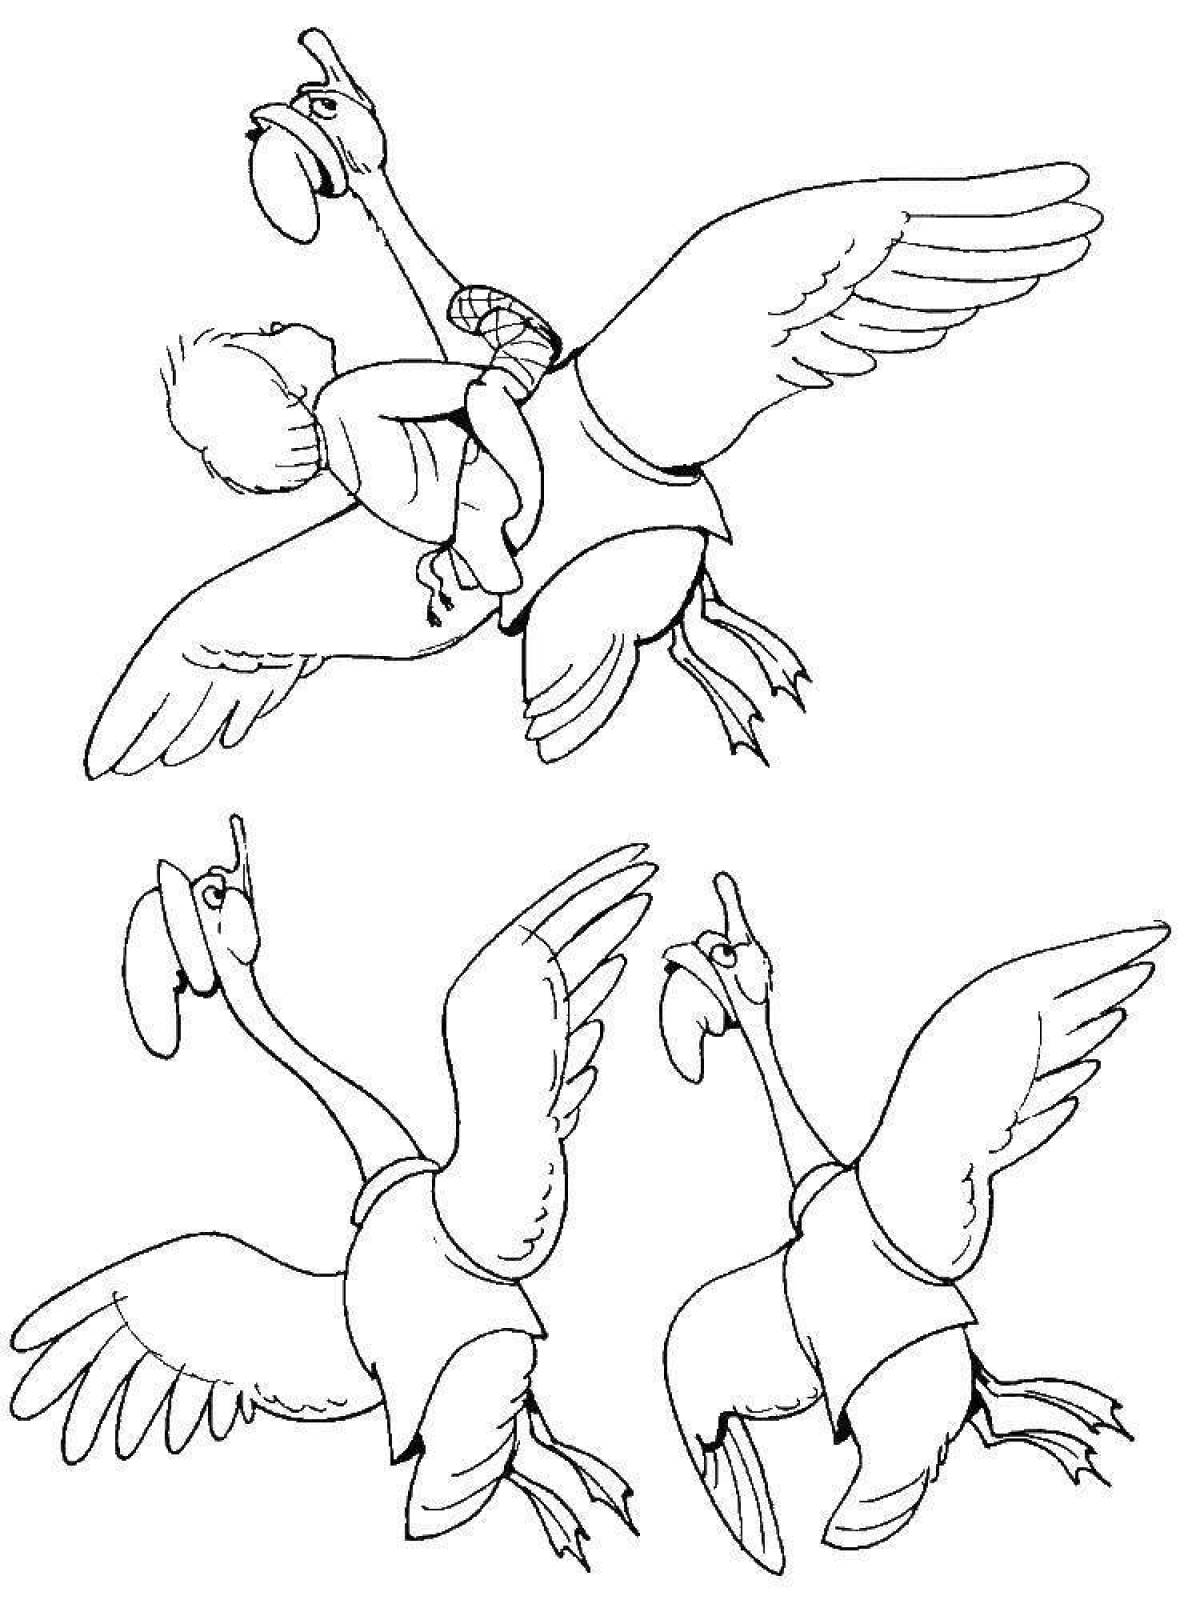 Раскраска Иванушка из сказки гуси лебеди